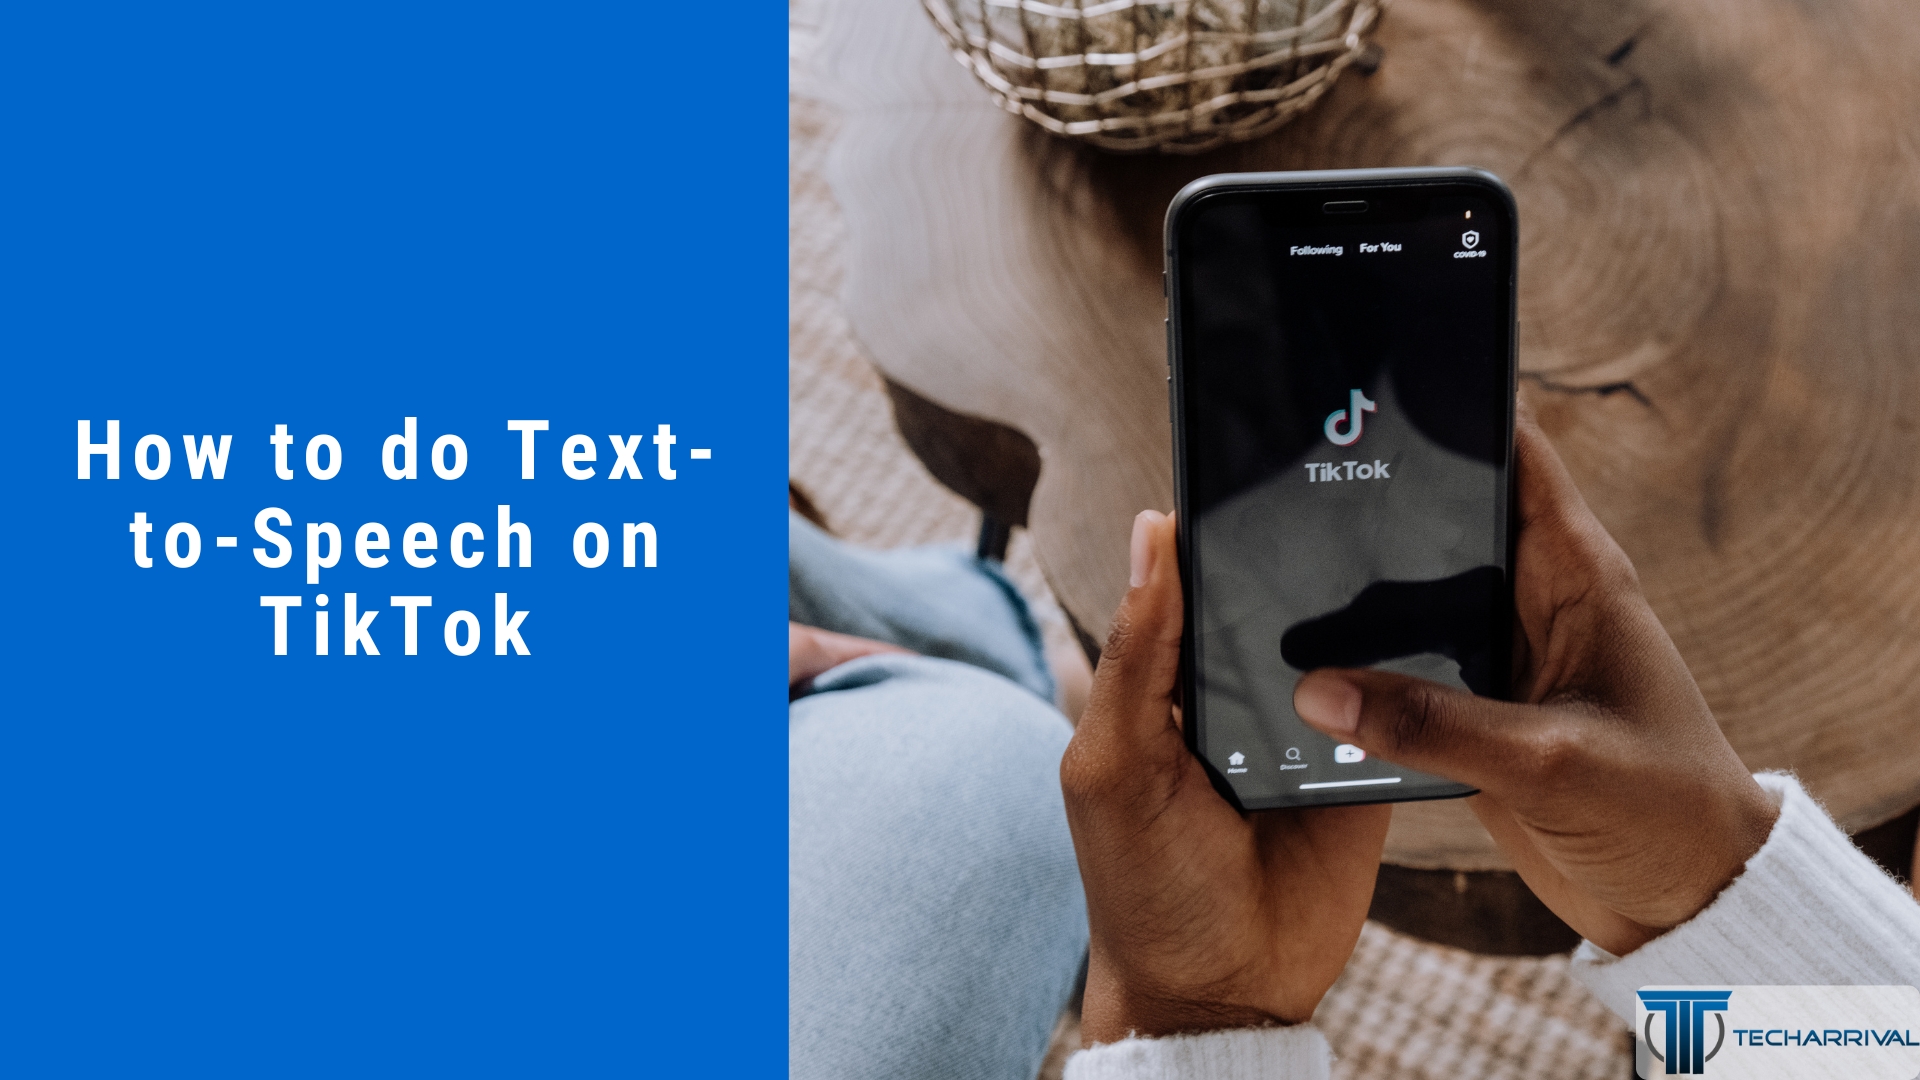 How to Use TexttoSpeech on TikTok